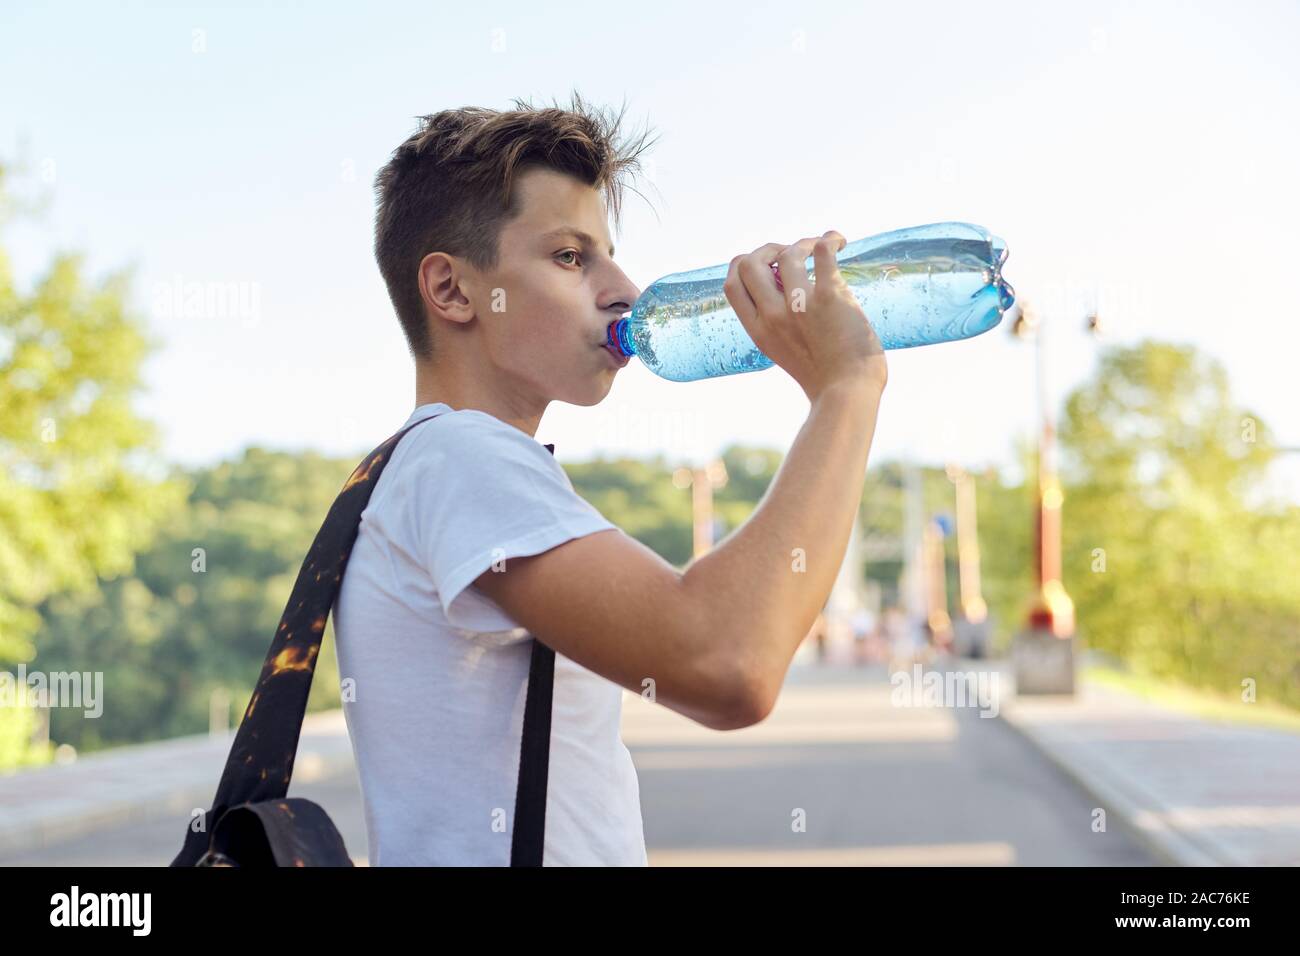 https://c8.alamy.com/comp/2AC76KE/teenager-boy-drinking-bottle-water-hot-summer-day-river-bridge-background-2AC76KE.jpg